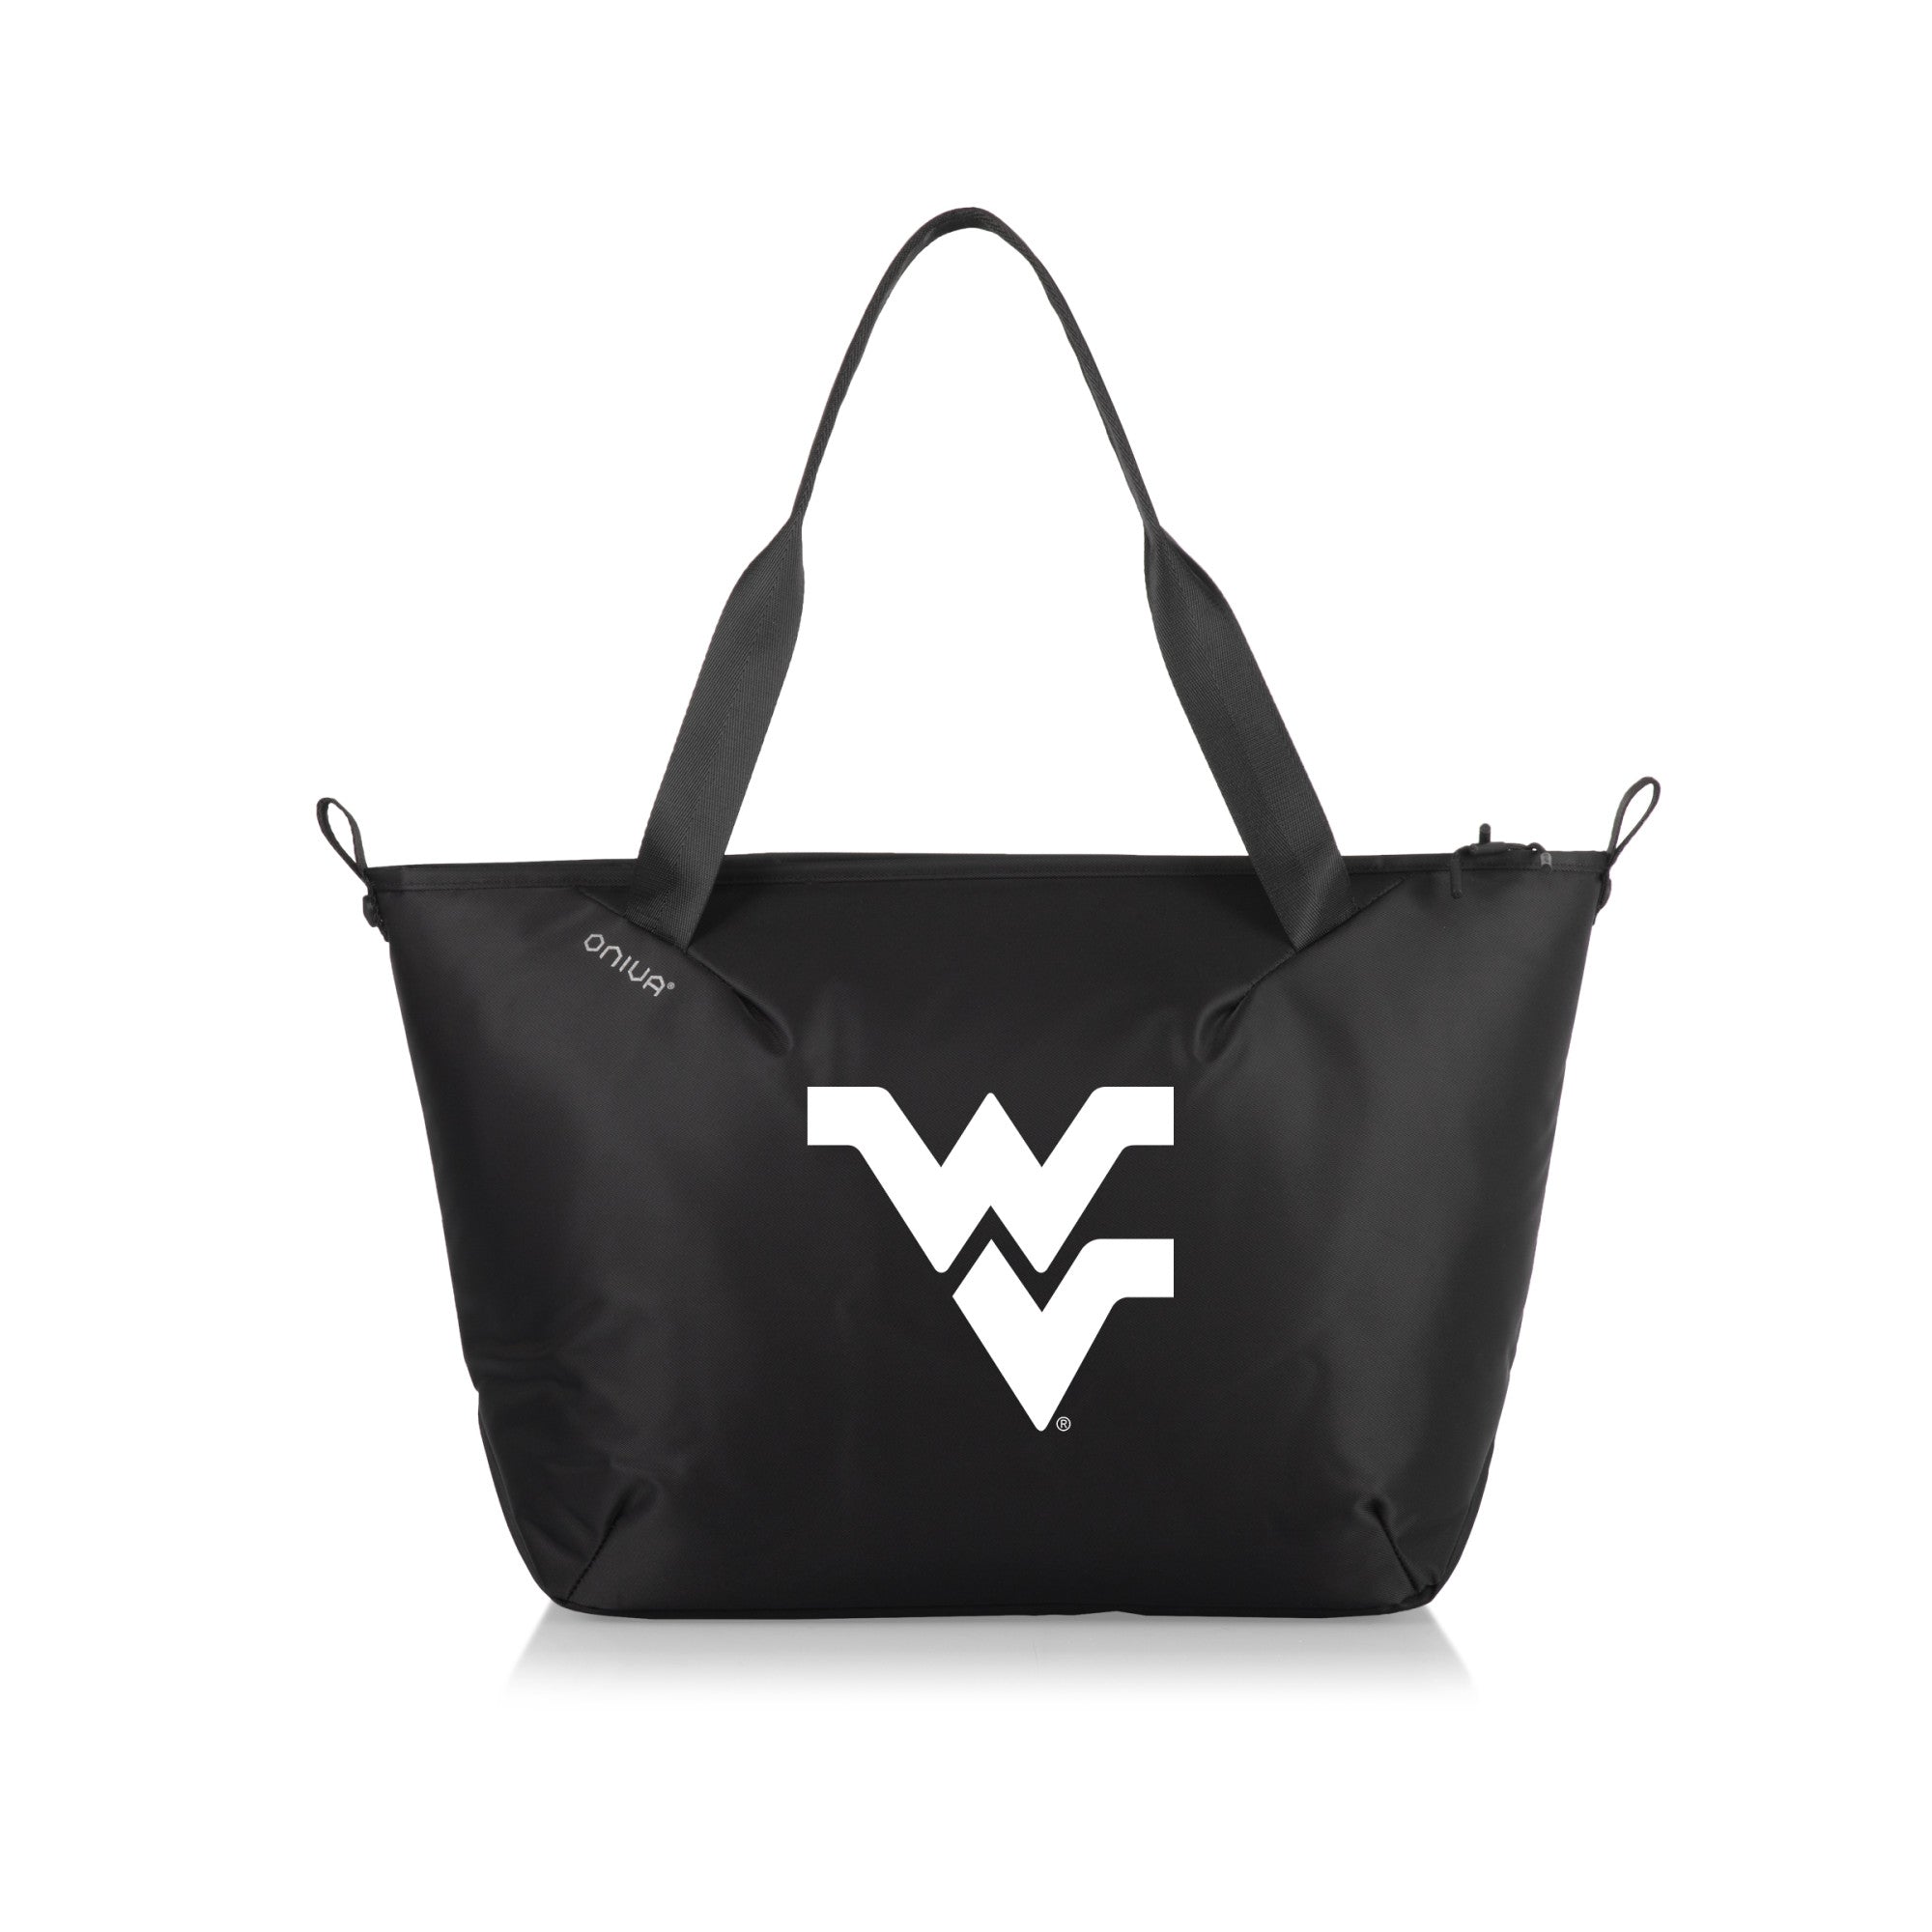 West Virginia Mountaineers - Tarana Cooler Tote Bag